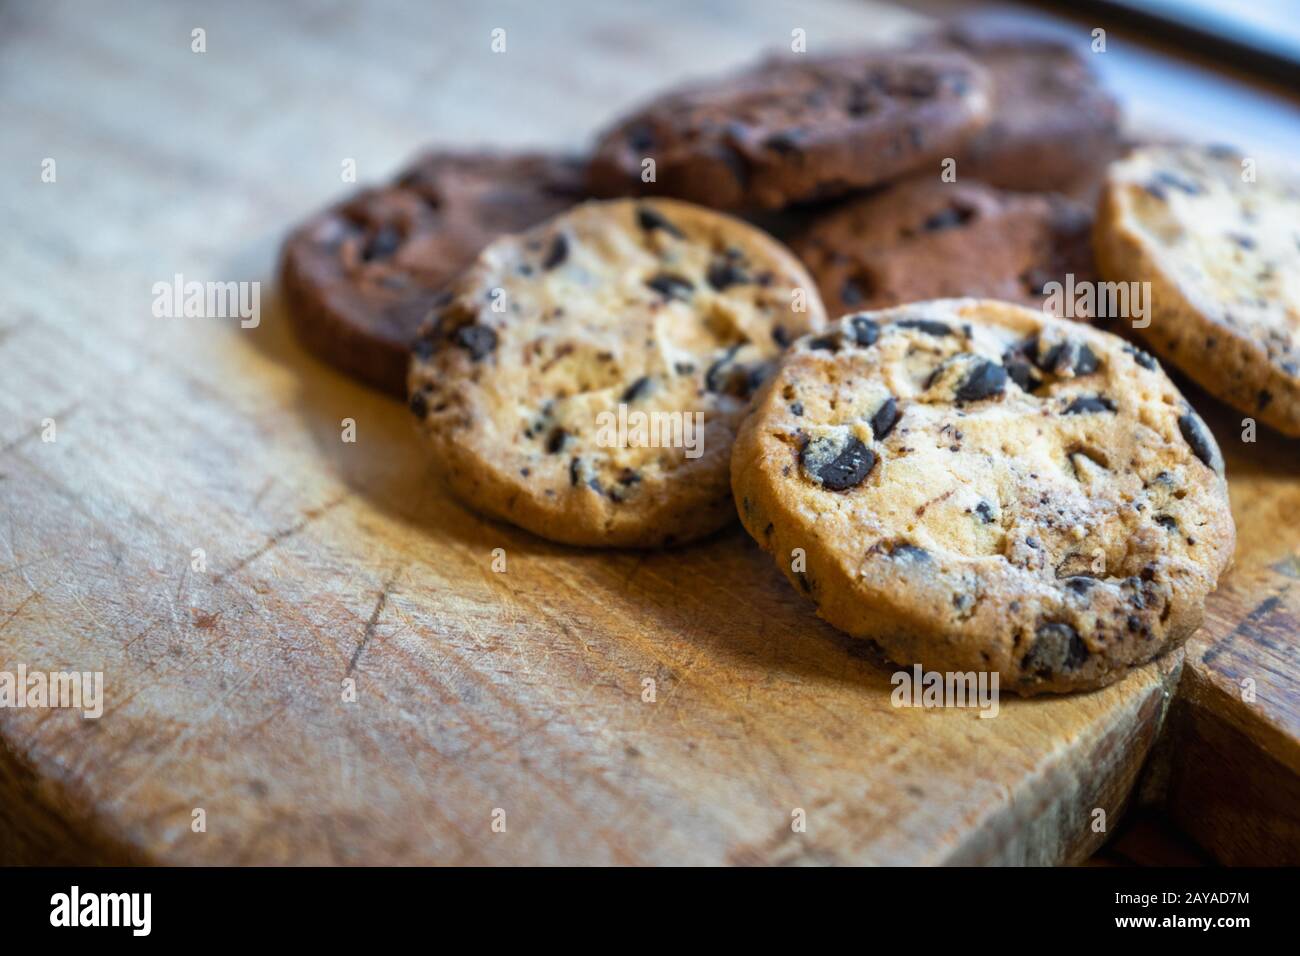 pila de galletas con trocitos de chocolate: galletas horneadas, postre, productos dulces Foto de stock